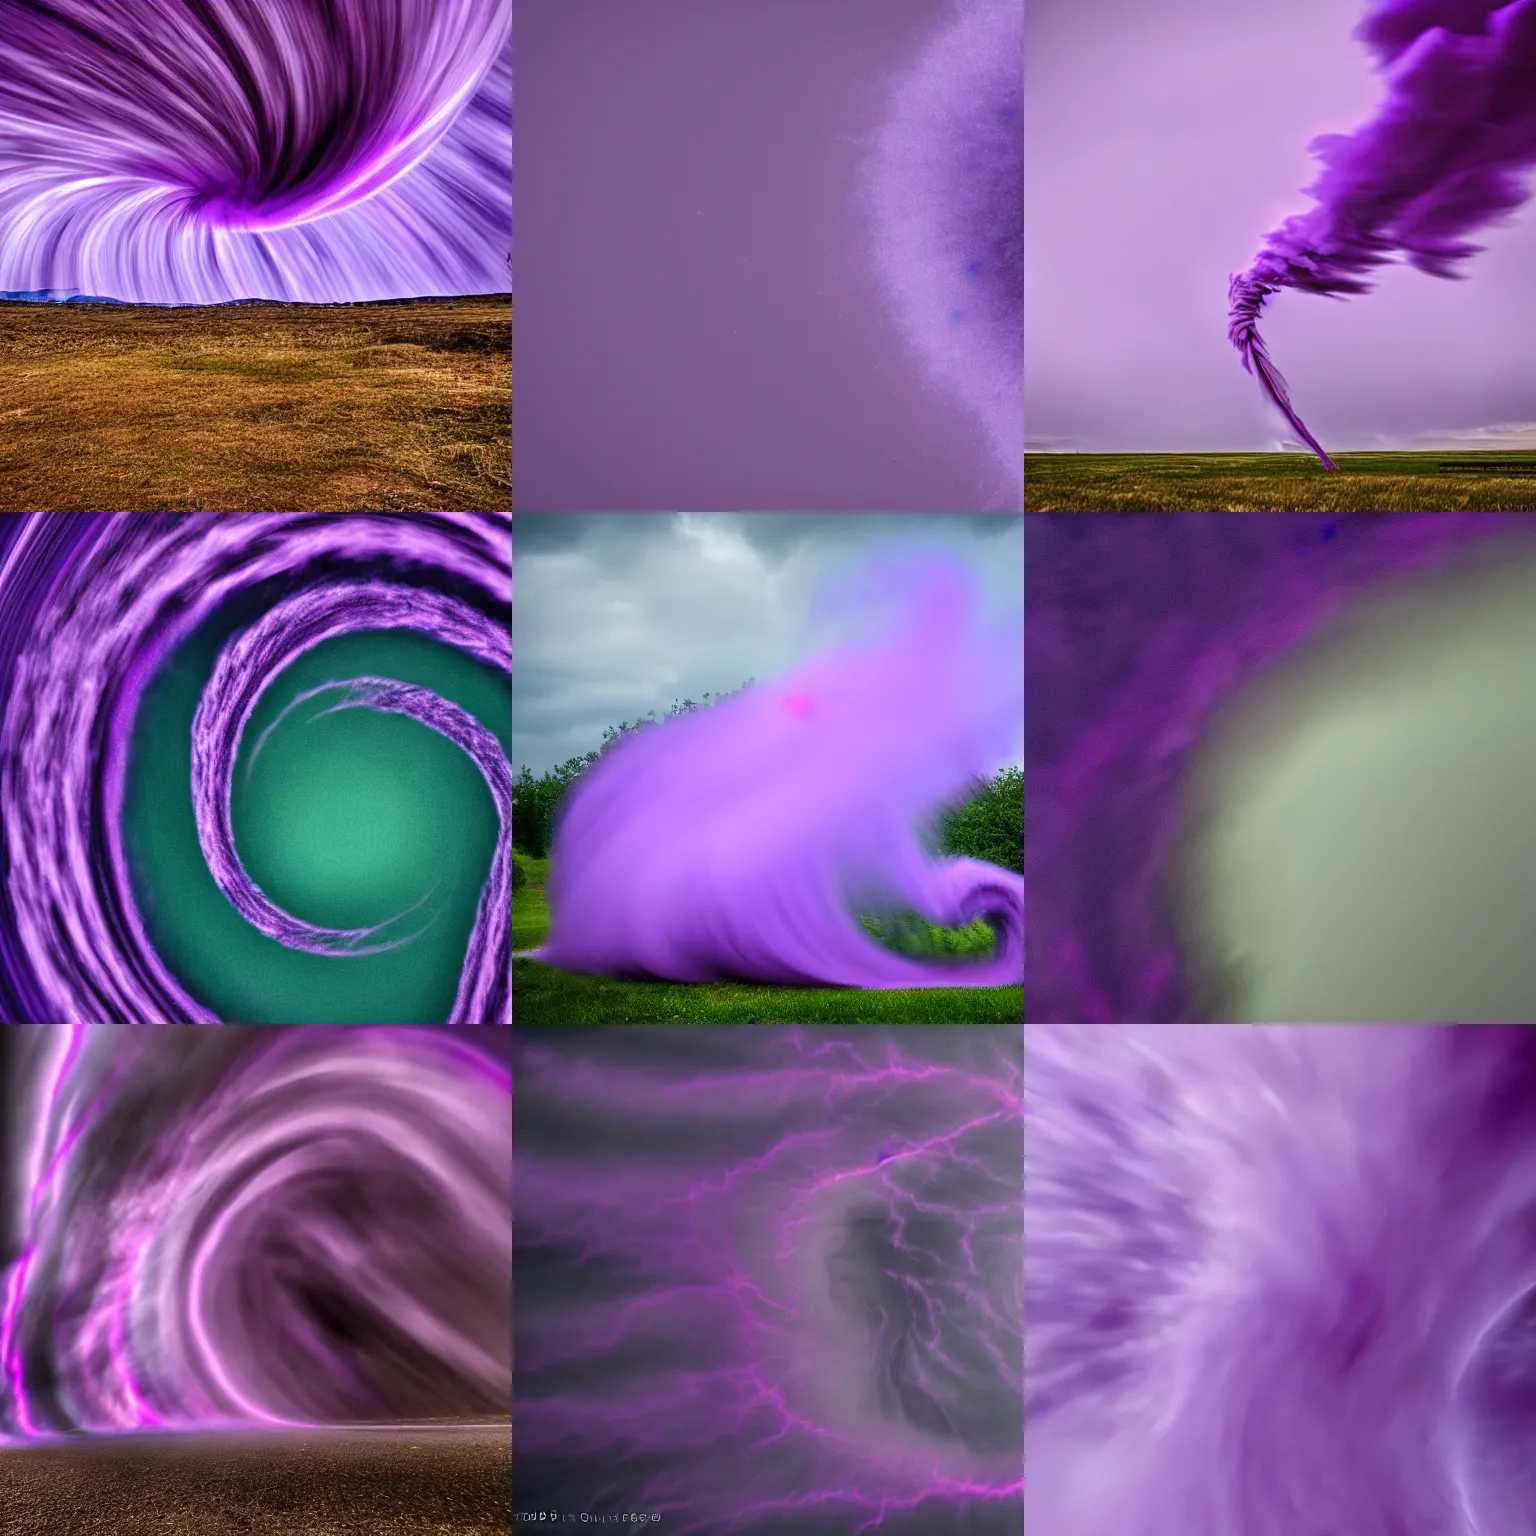 Prompt: Purple Tornado looking like a regular tornado captured on Niko camera 8k